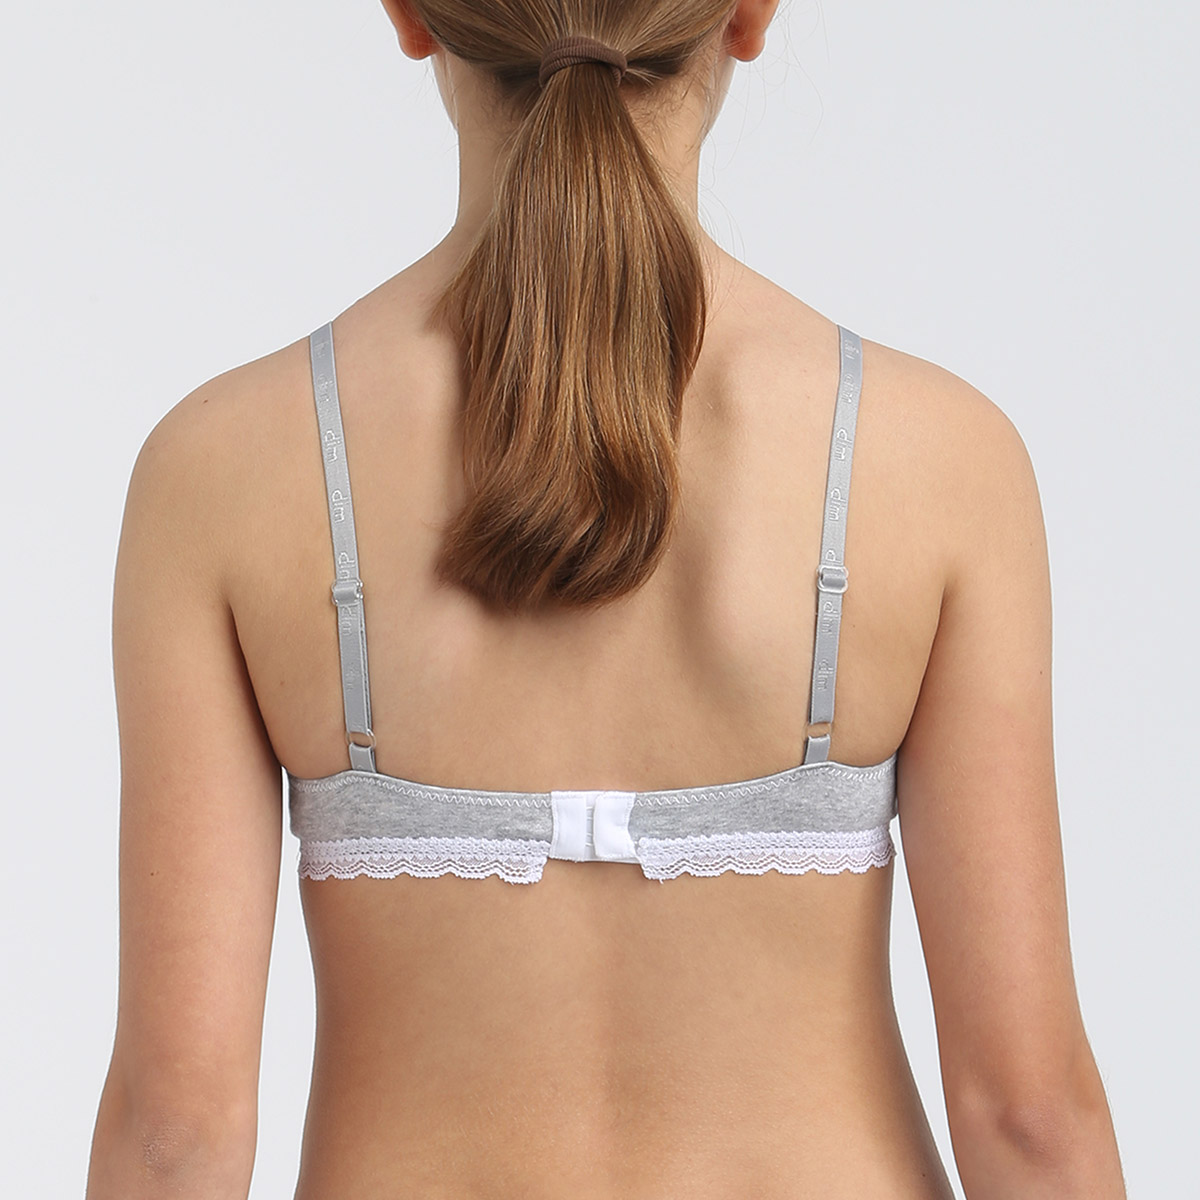 Dim Trendy girls' grey stretch cotton bra with removable padding